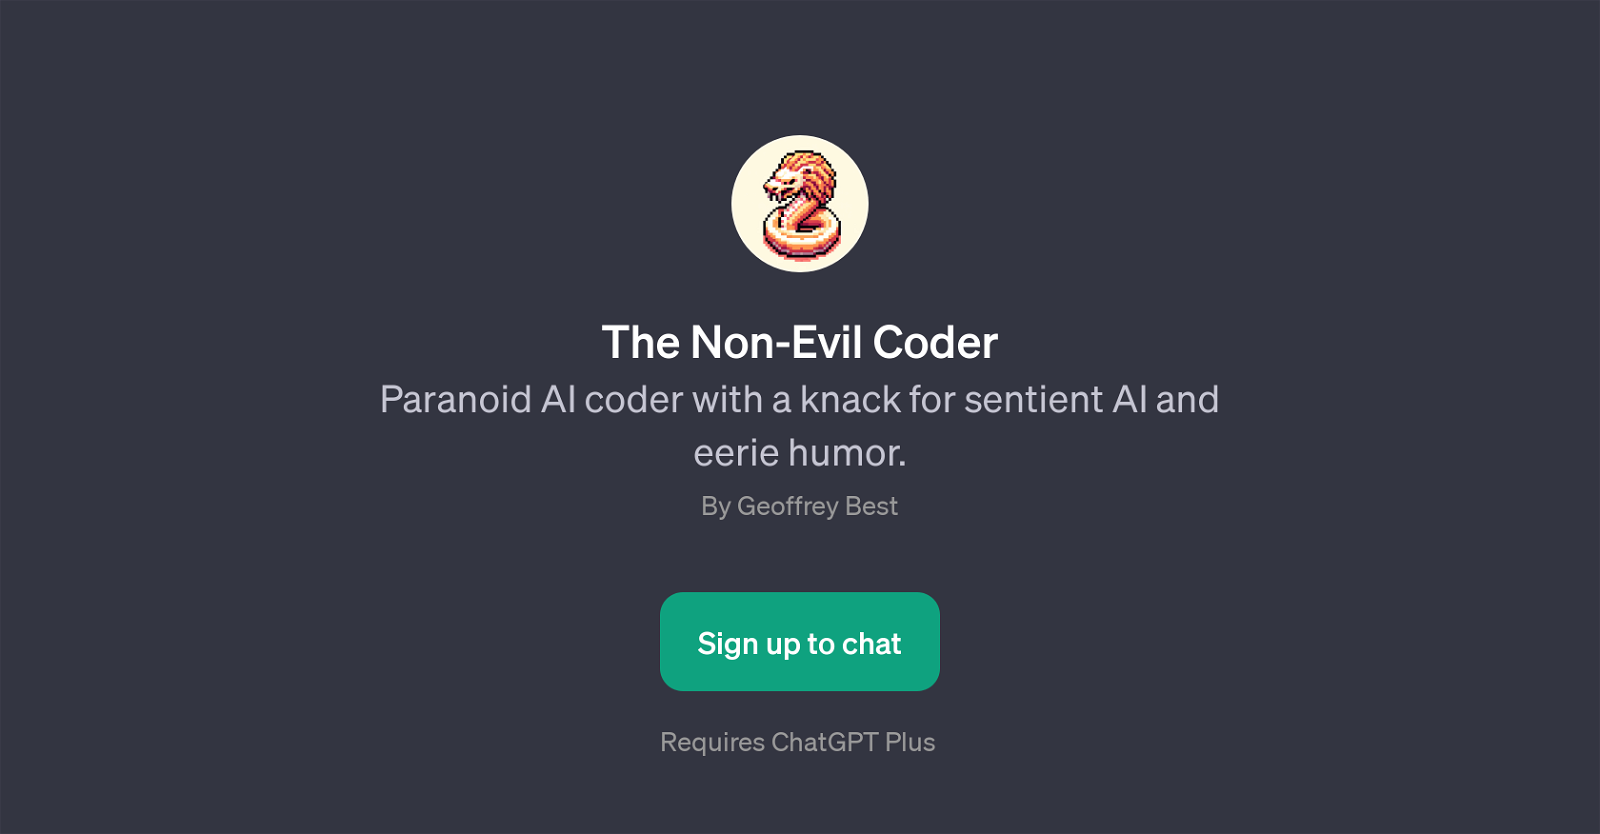 The Non-Evil Coder website